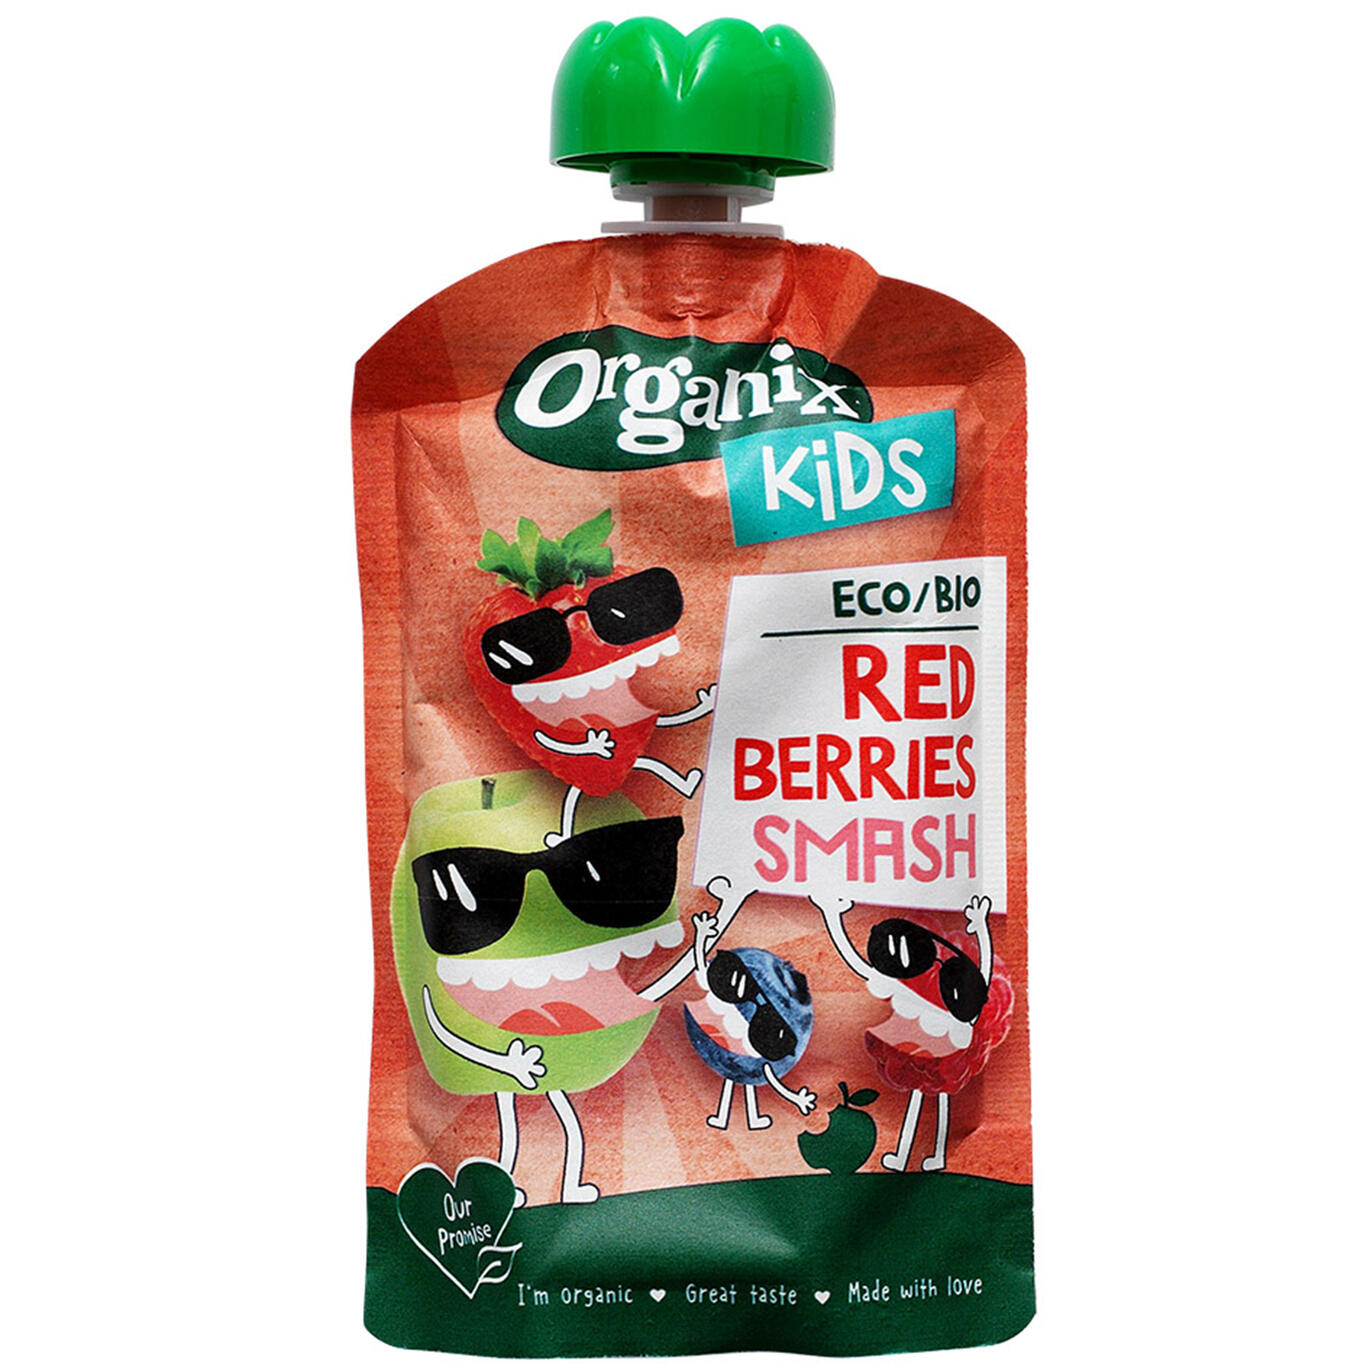 Red Berries smash Organix kids